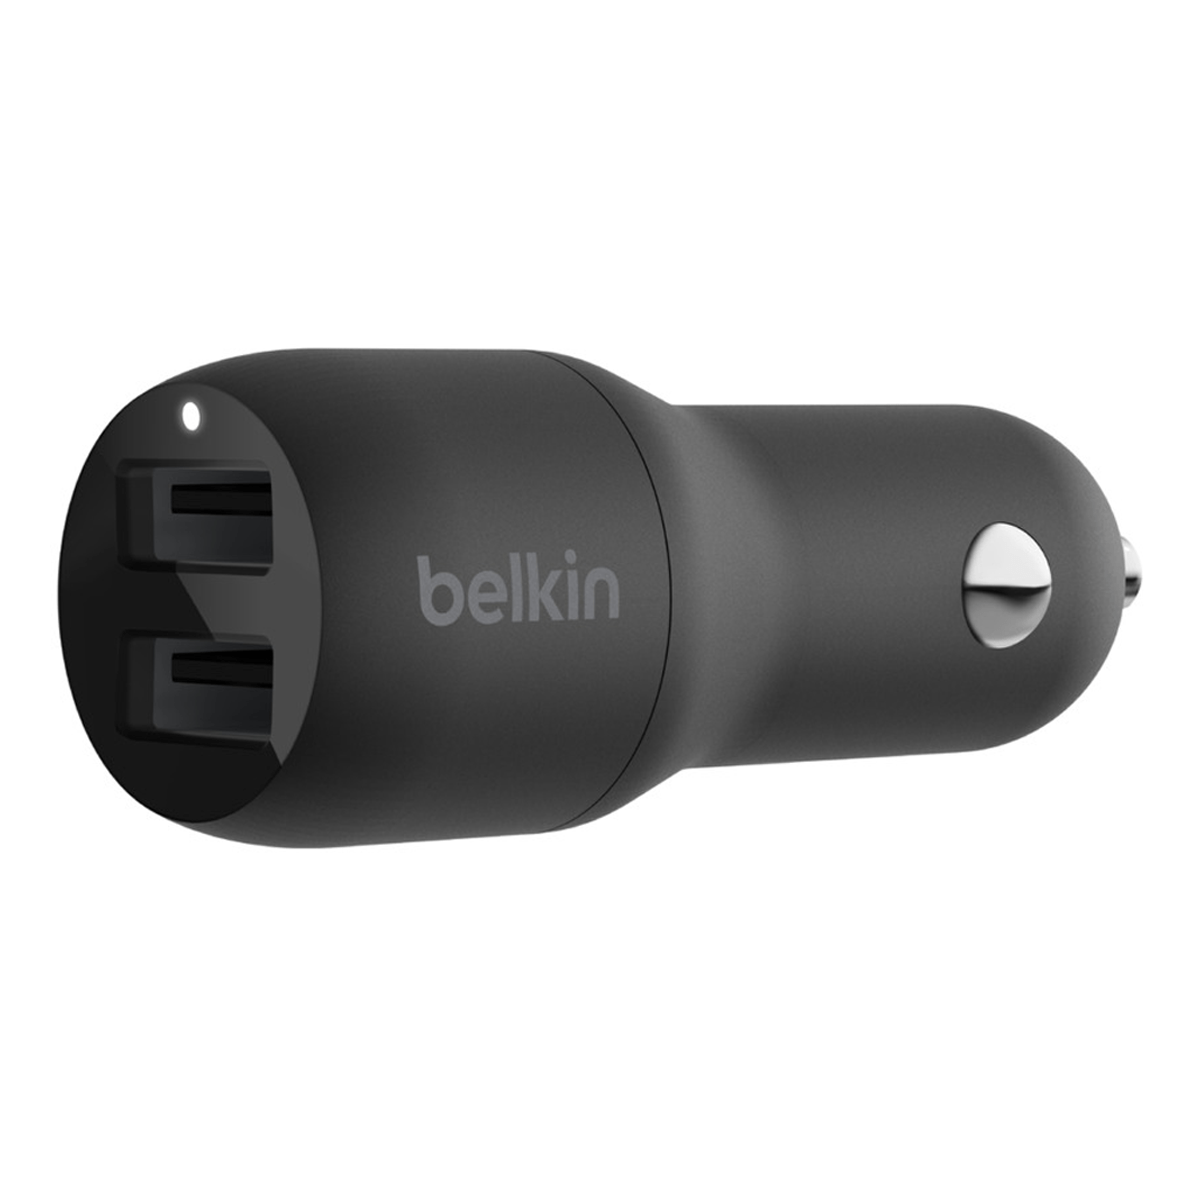 Cargador Carga Rápida iPhone/Smartphone de Carro Belkin Original Boost Charge USB-A 12W